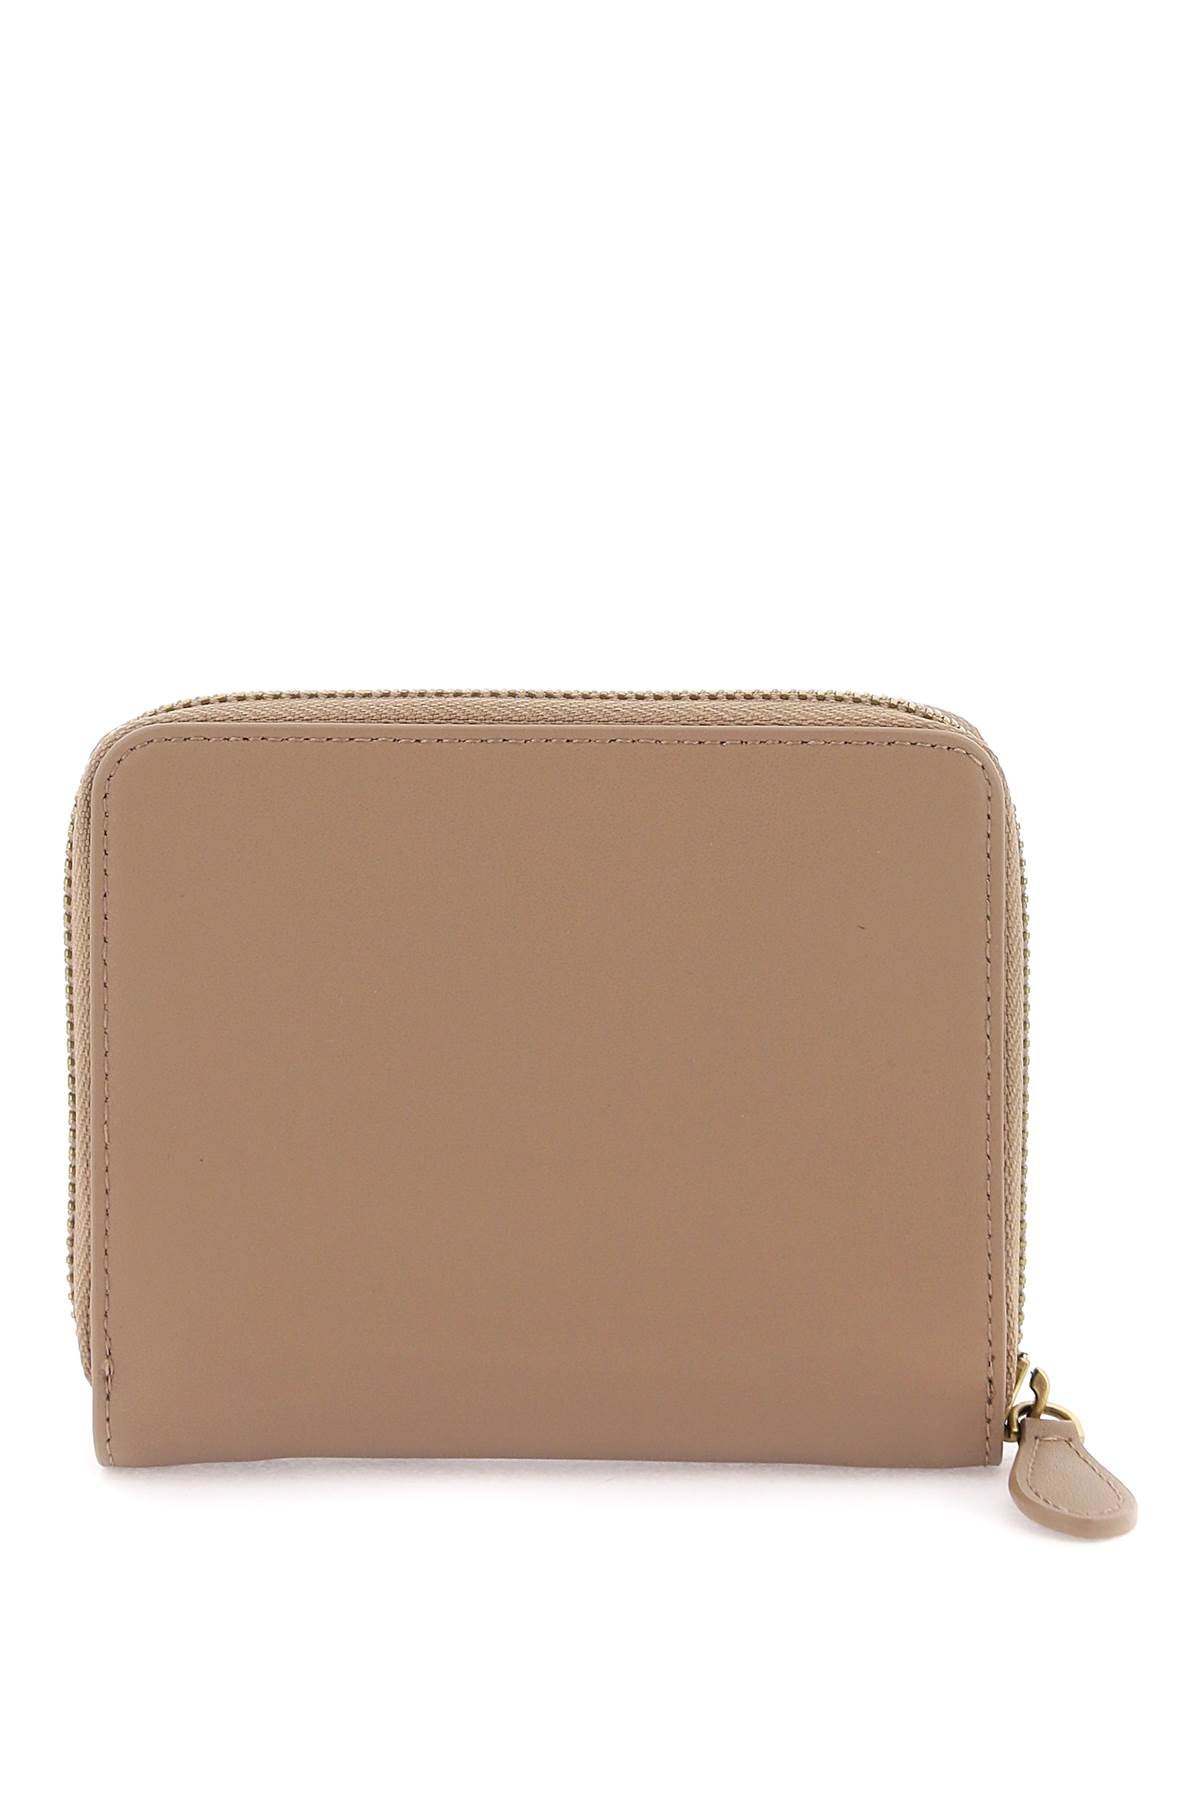 Pinko leather zip-around wallet-2